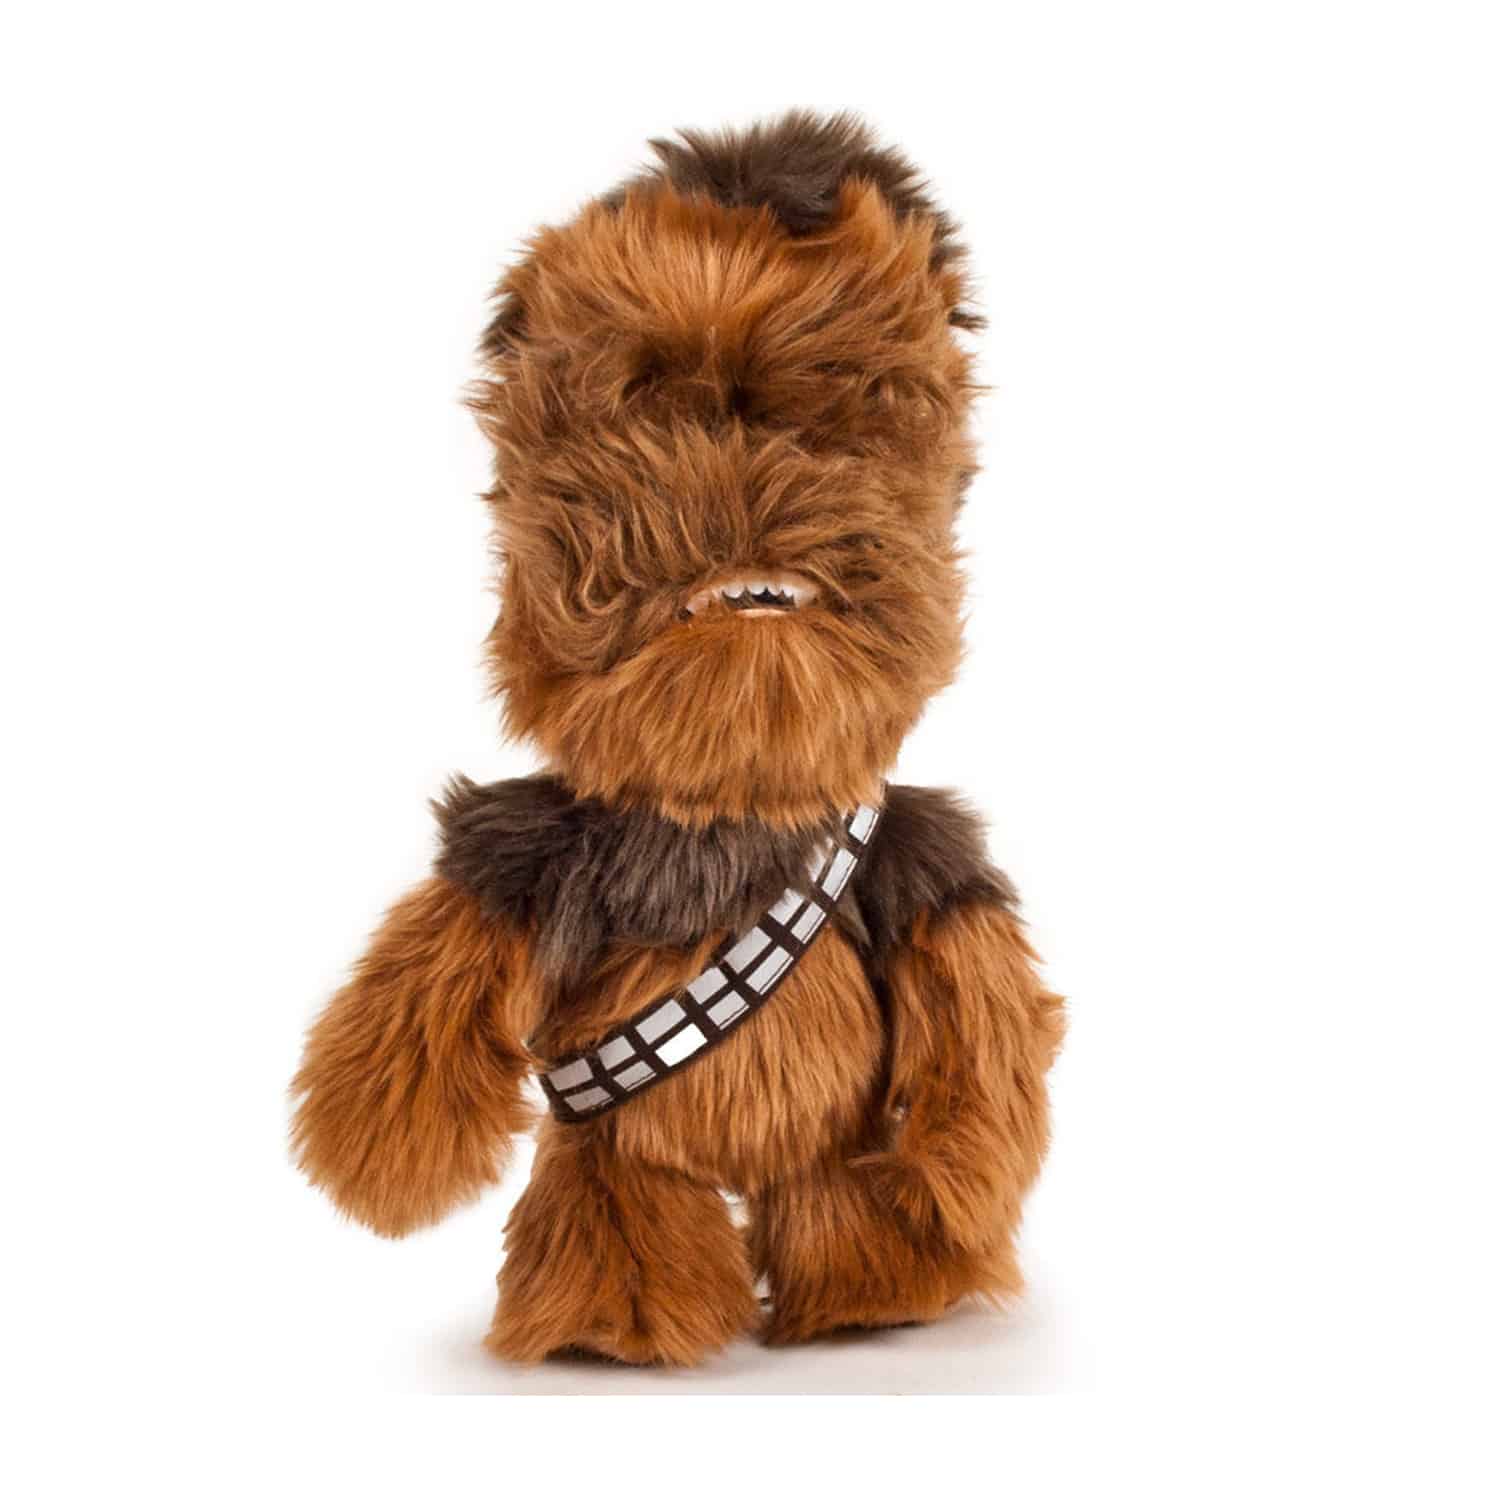 Star Wars - Chewbacc Plush Toy